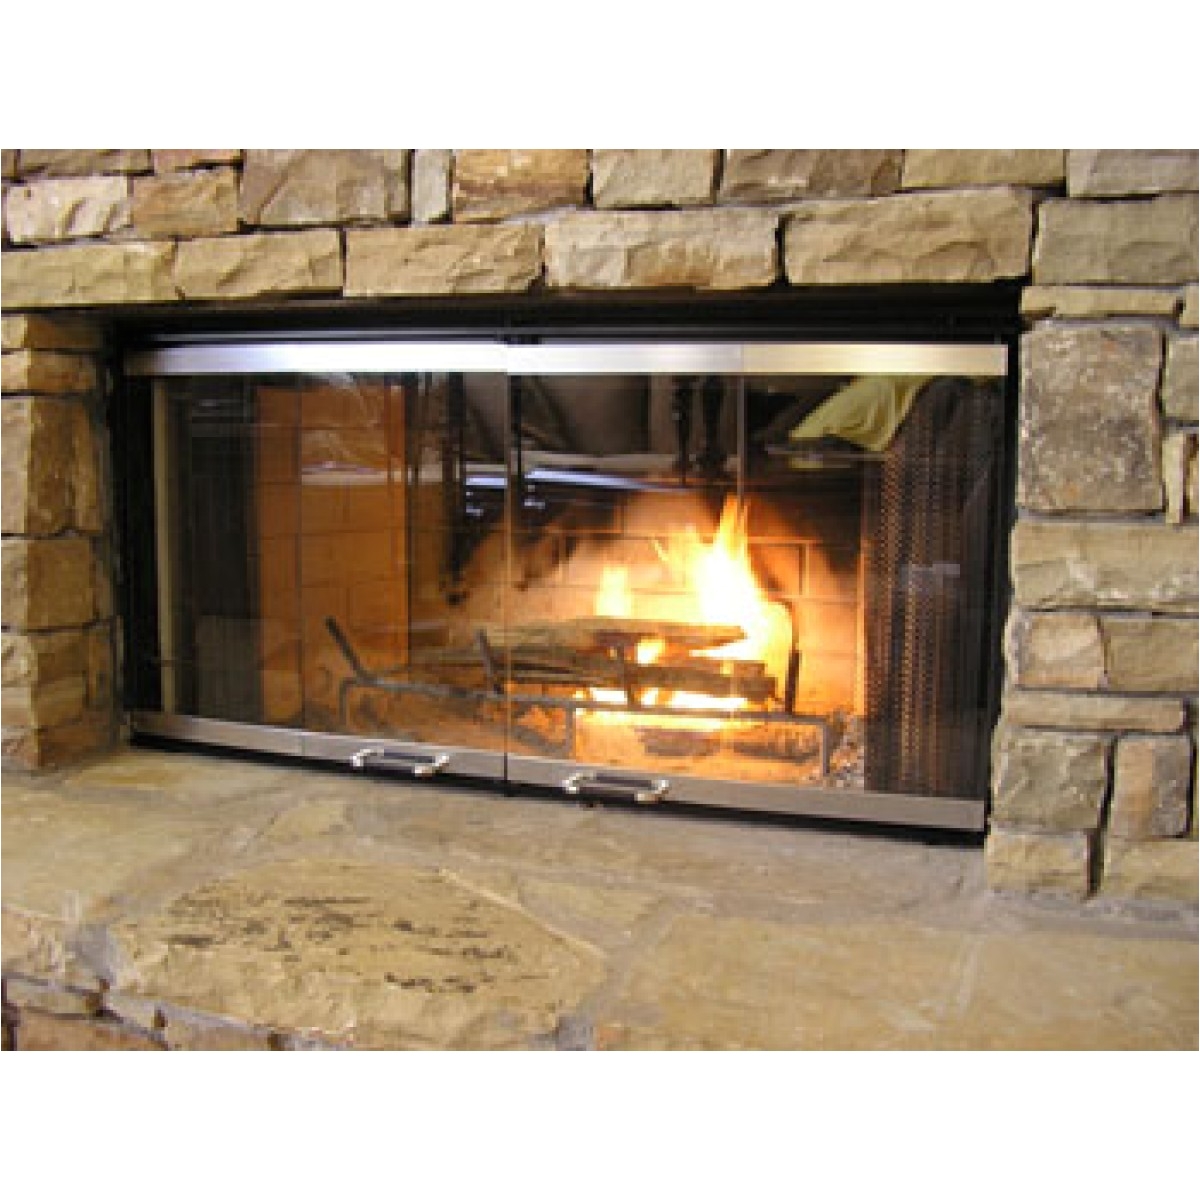 Temtex Fireplace Doors Fireplace Replacement Glass for Prefab Fireplace Doors Brick Anew